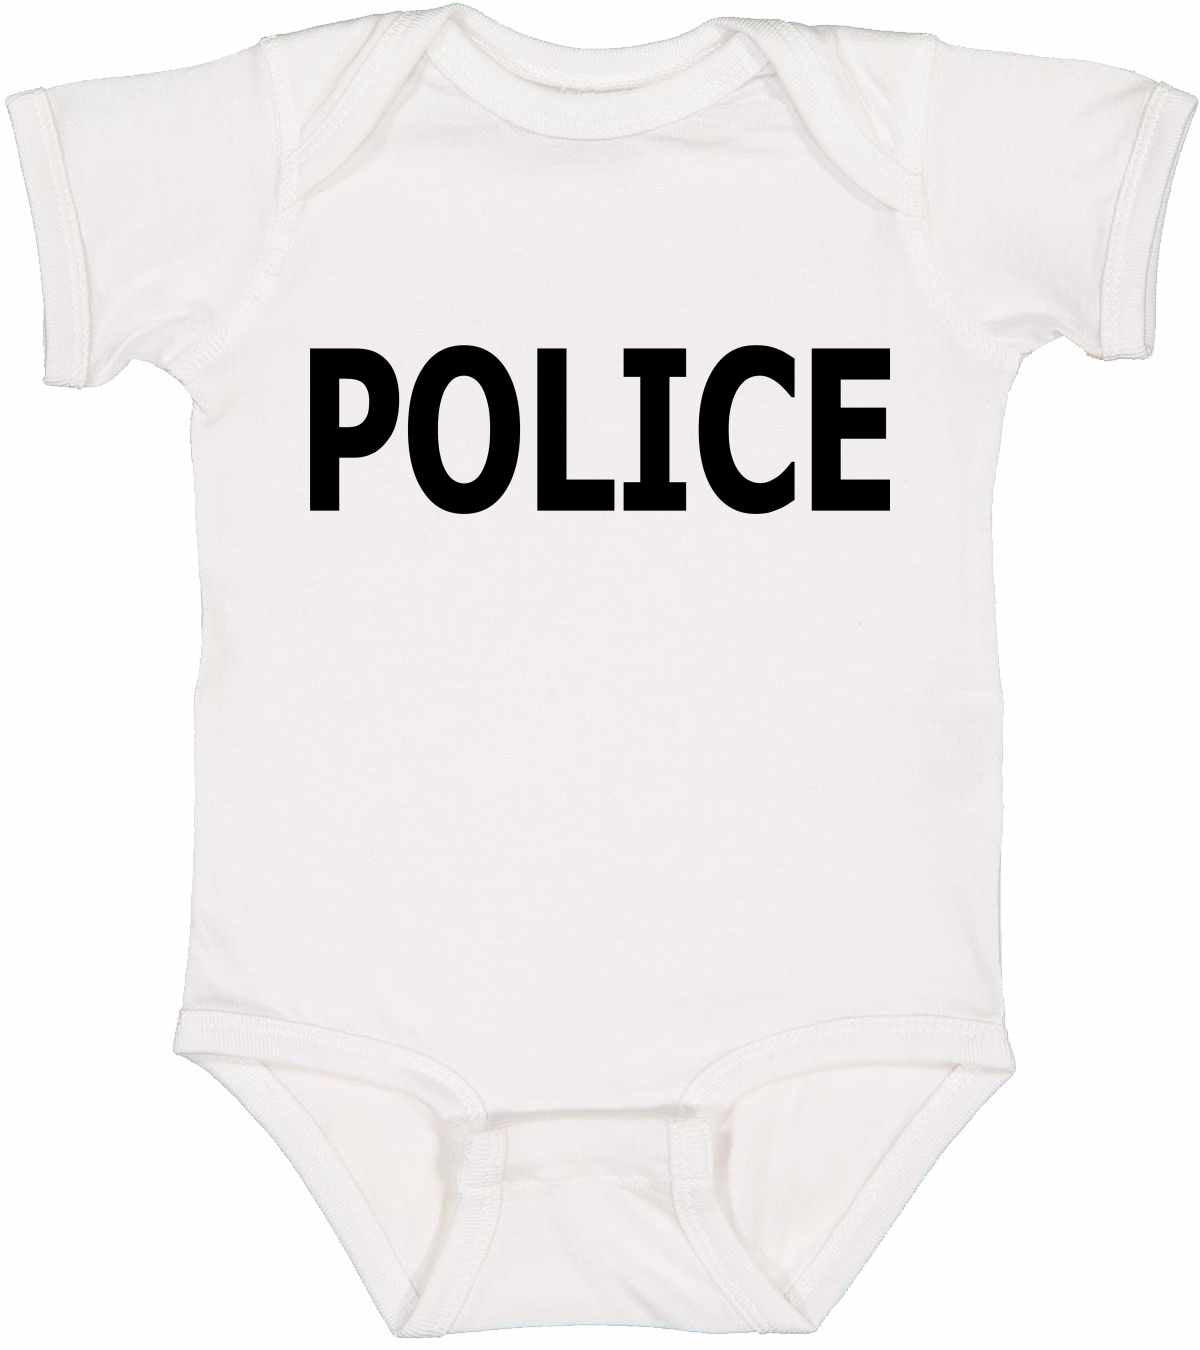 POLICE on Infant BodySuit